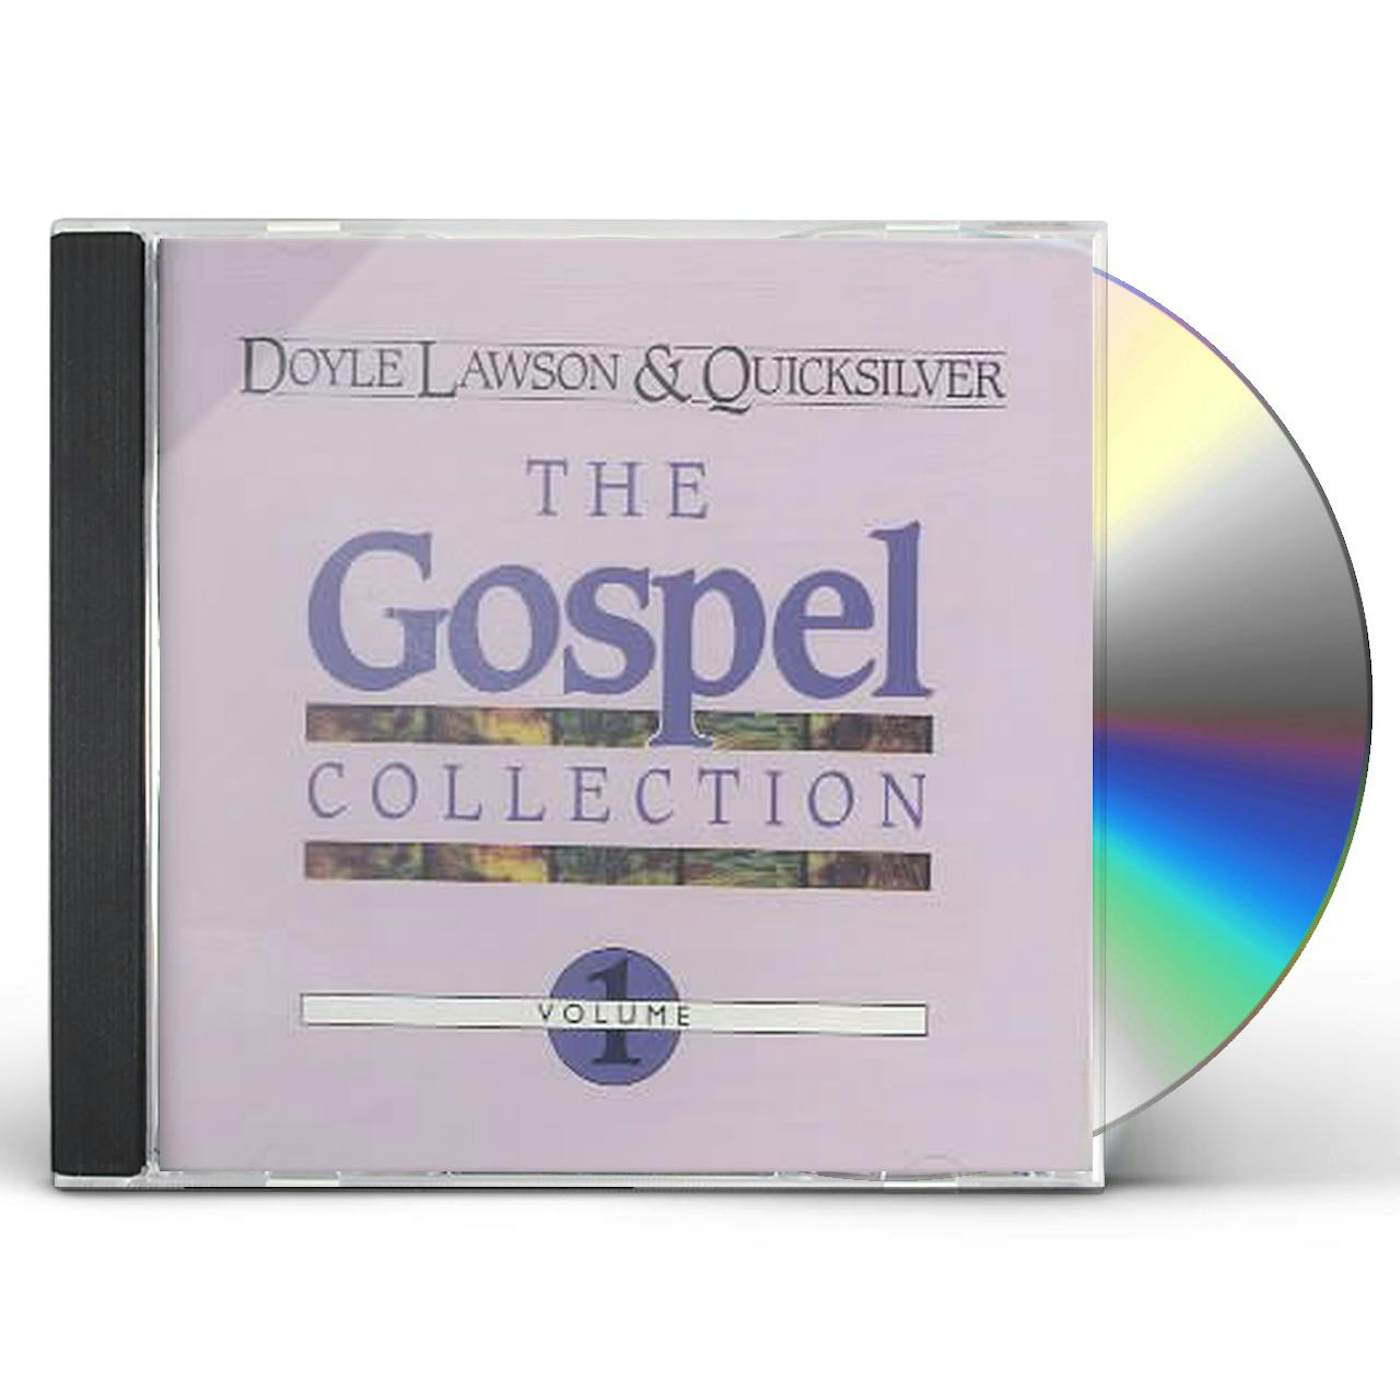 Doyle Lawson & Quicksilver GOSPEL COLLECTION 1 CD